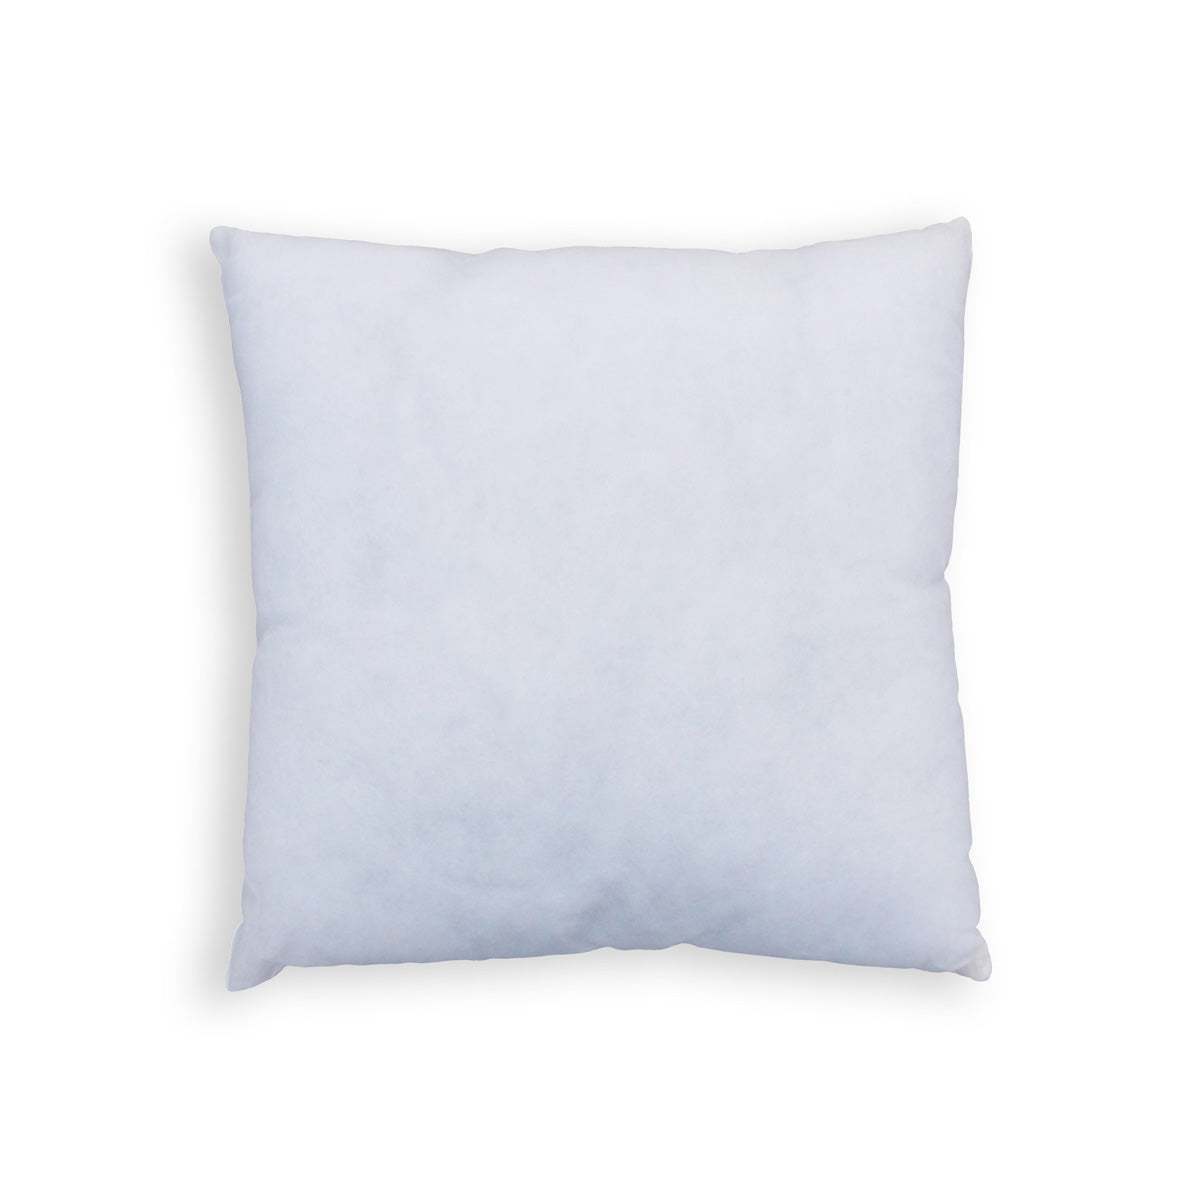 Pillow insert / Cushion filler - Square